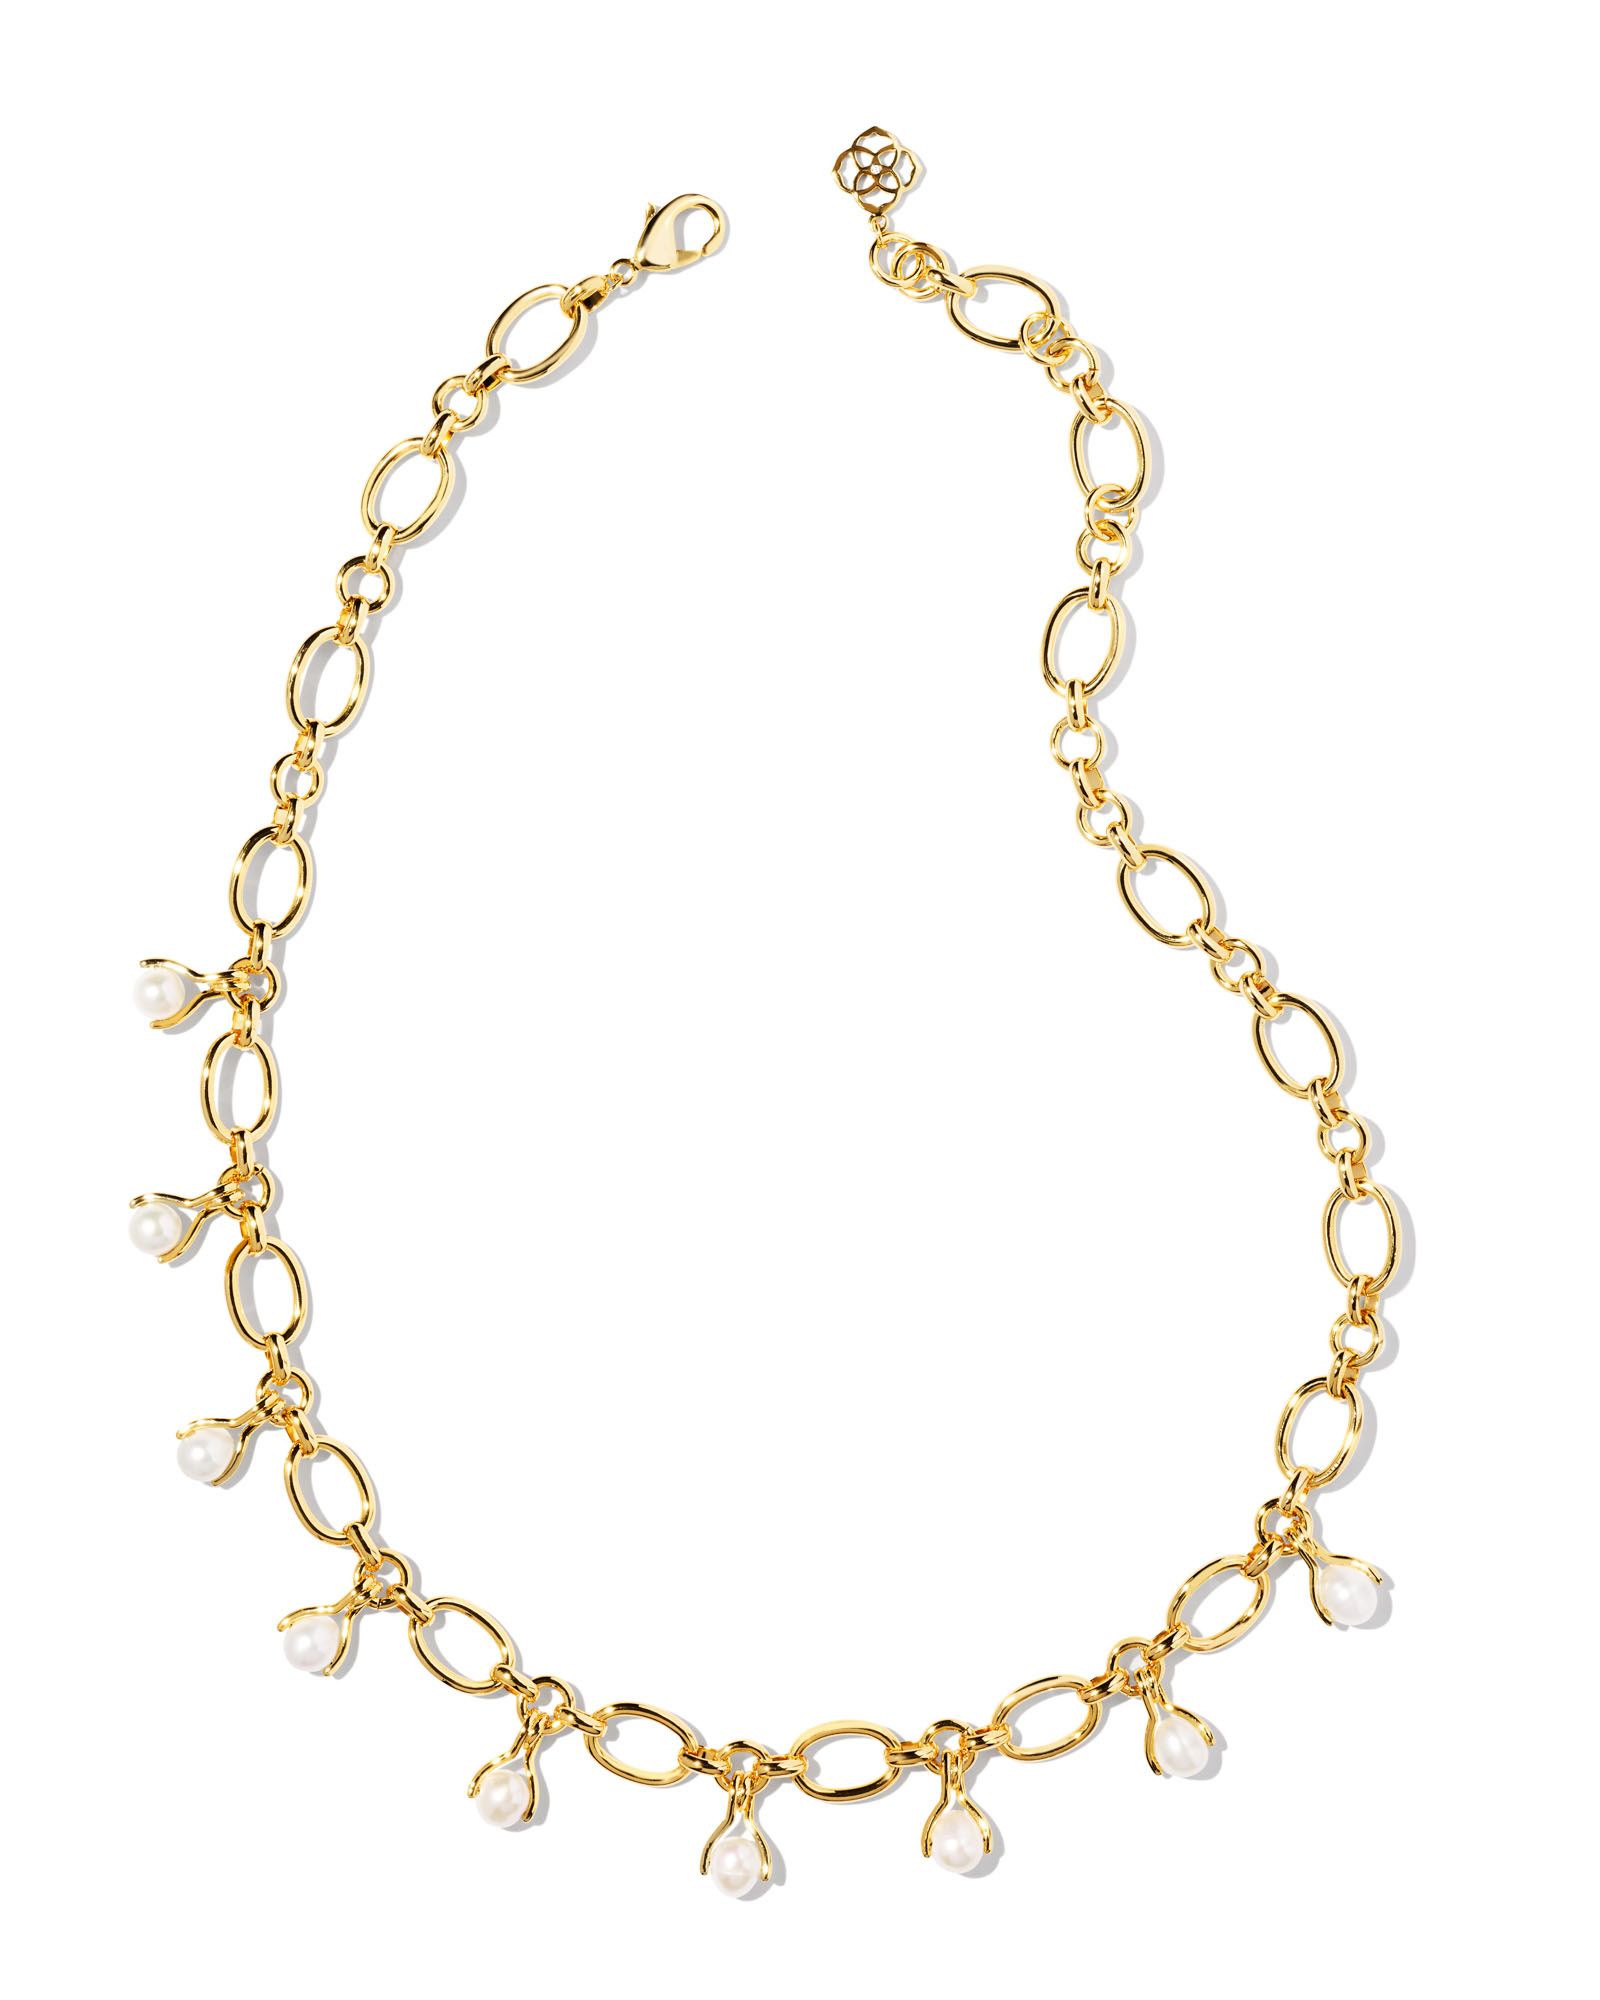 Ashton Gold Pearl Chain Necklace in White Pearl | Kendra Scott